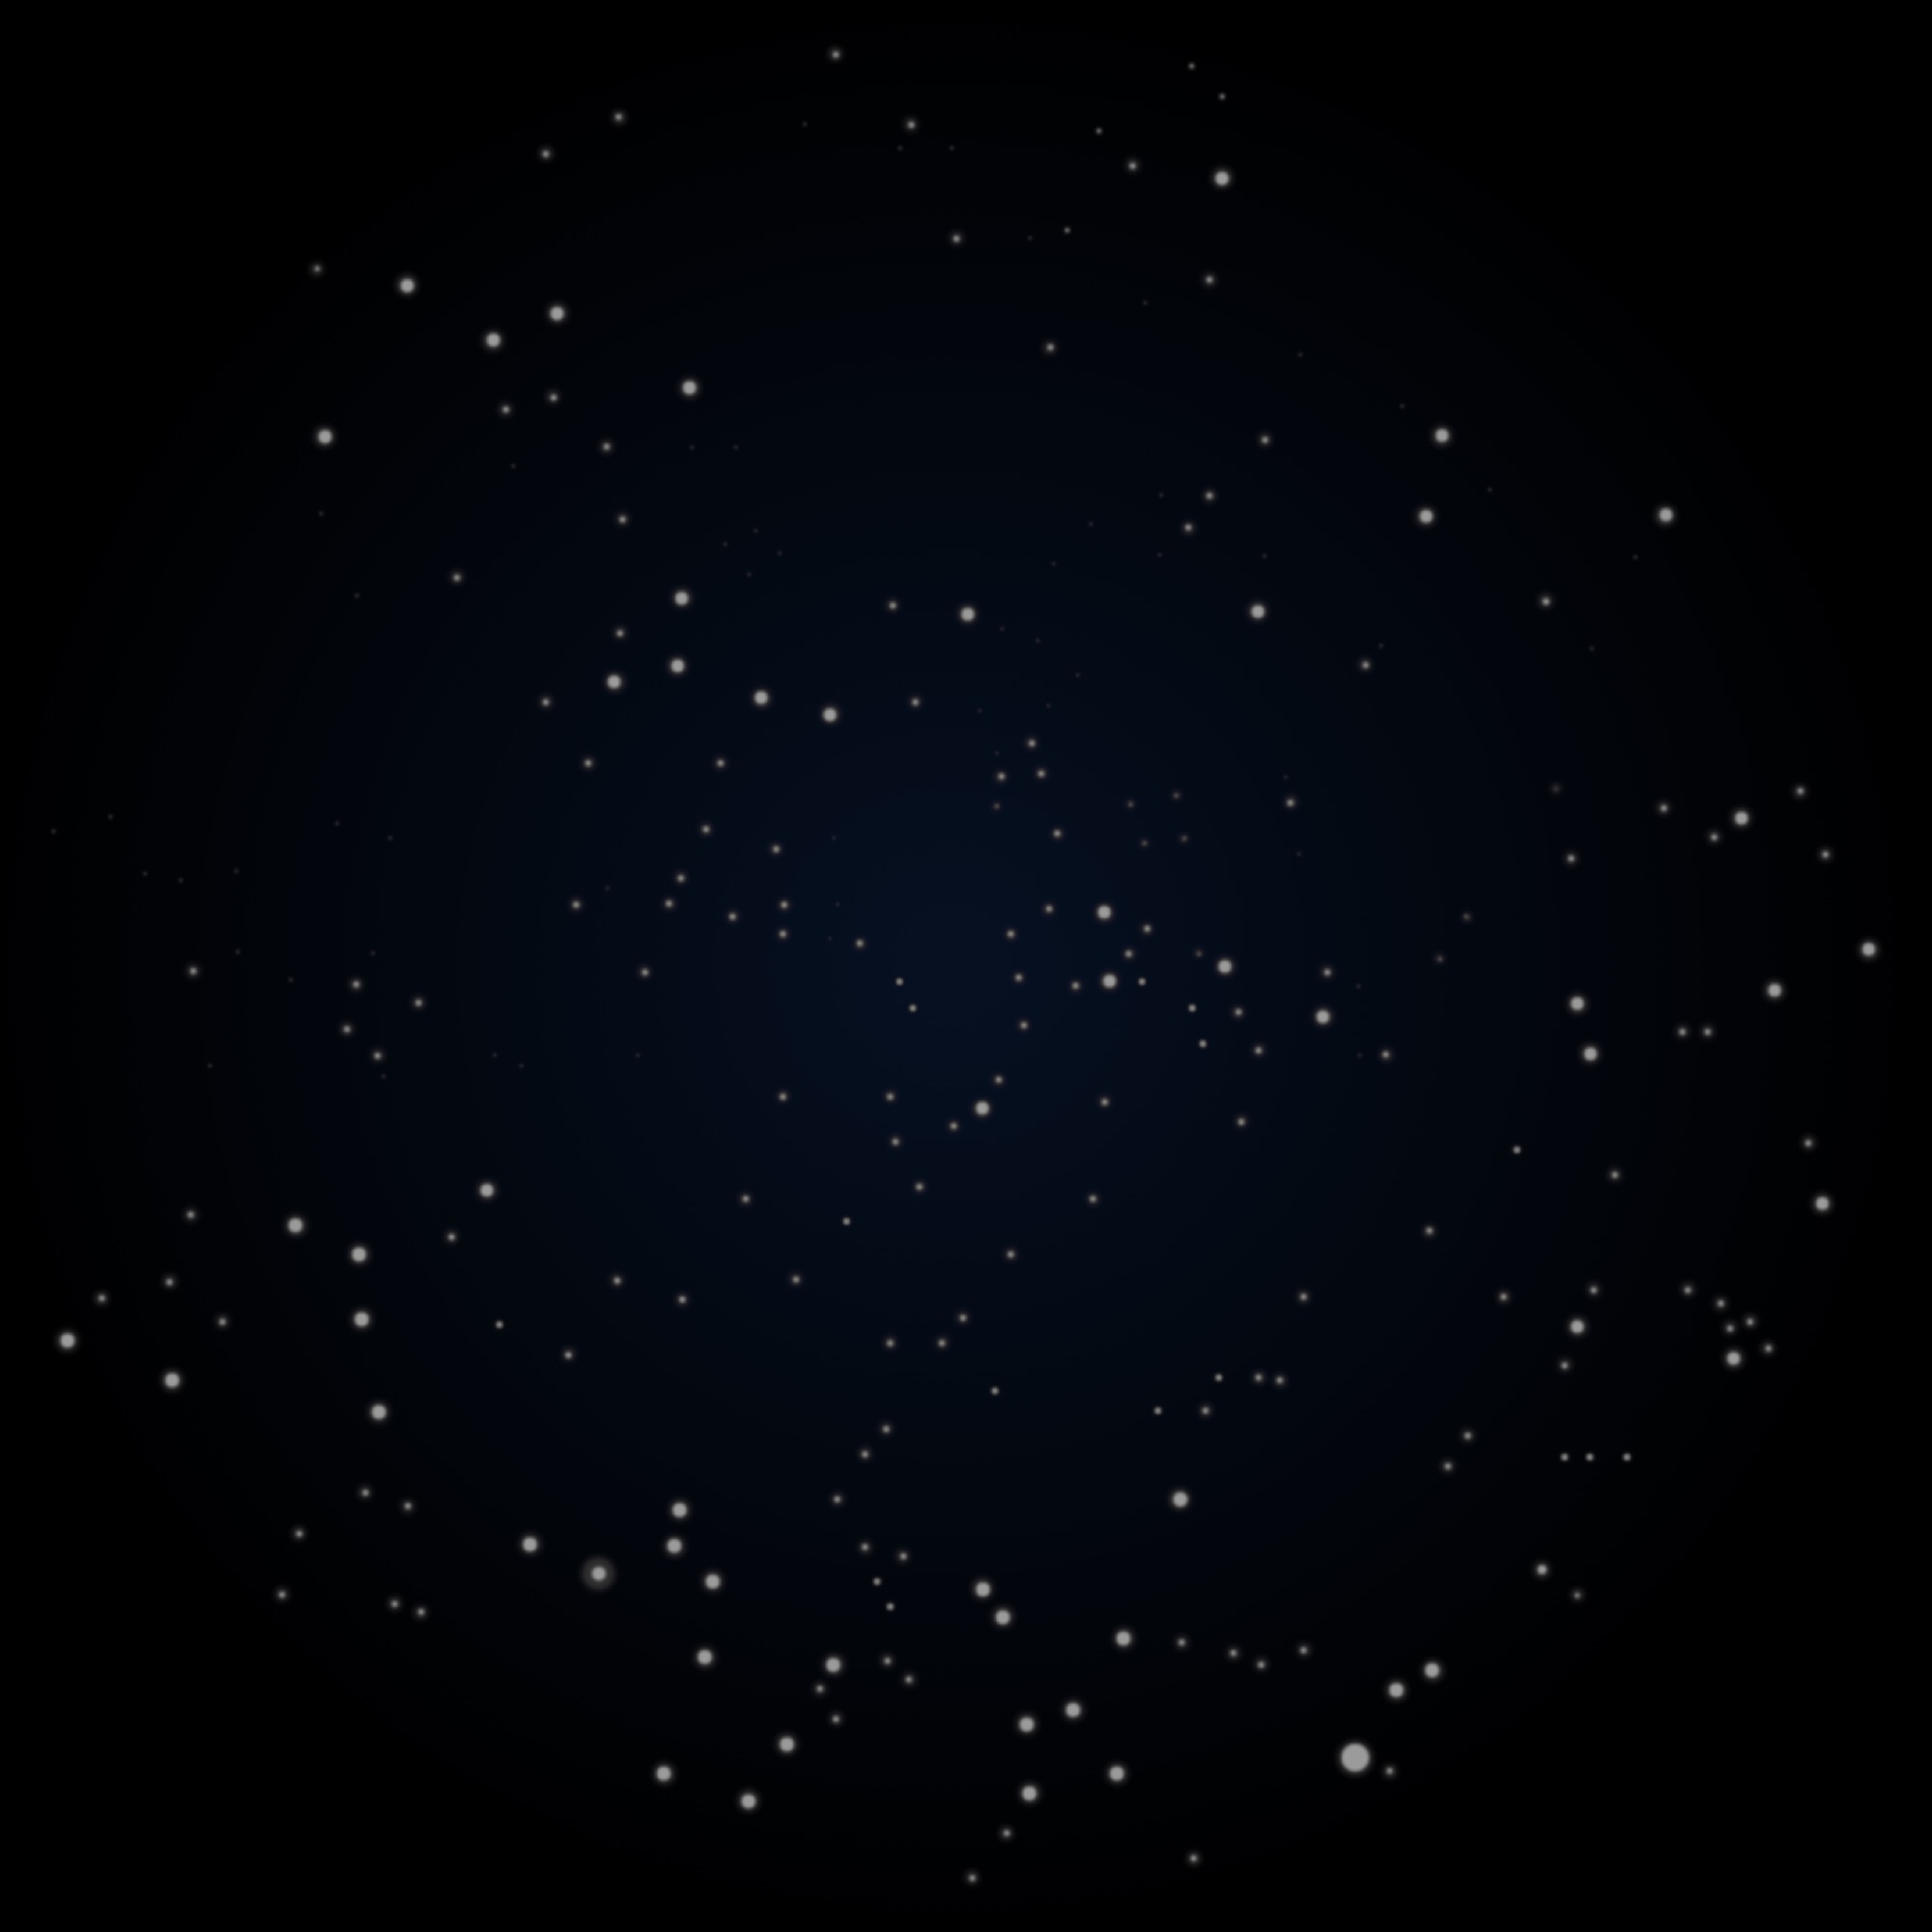 rotating star constellation in night sky